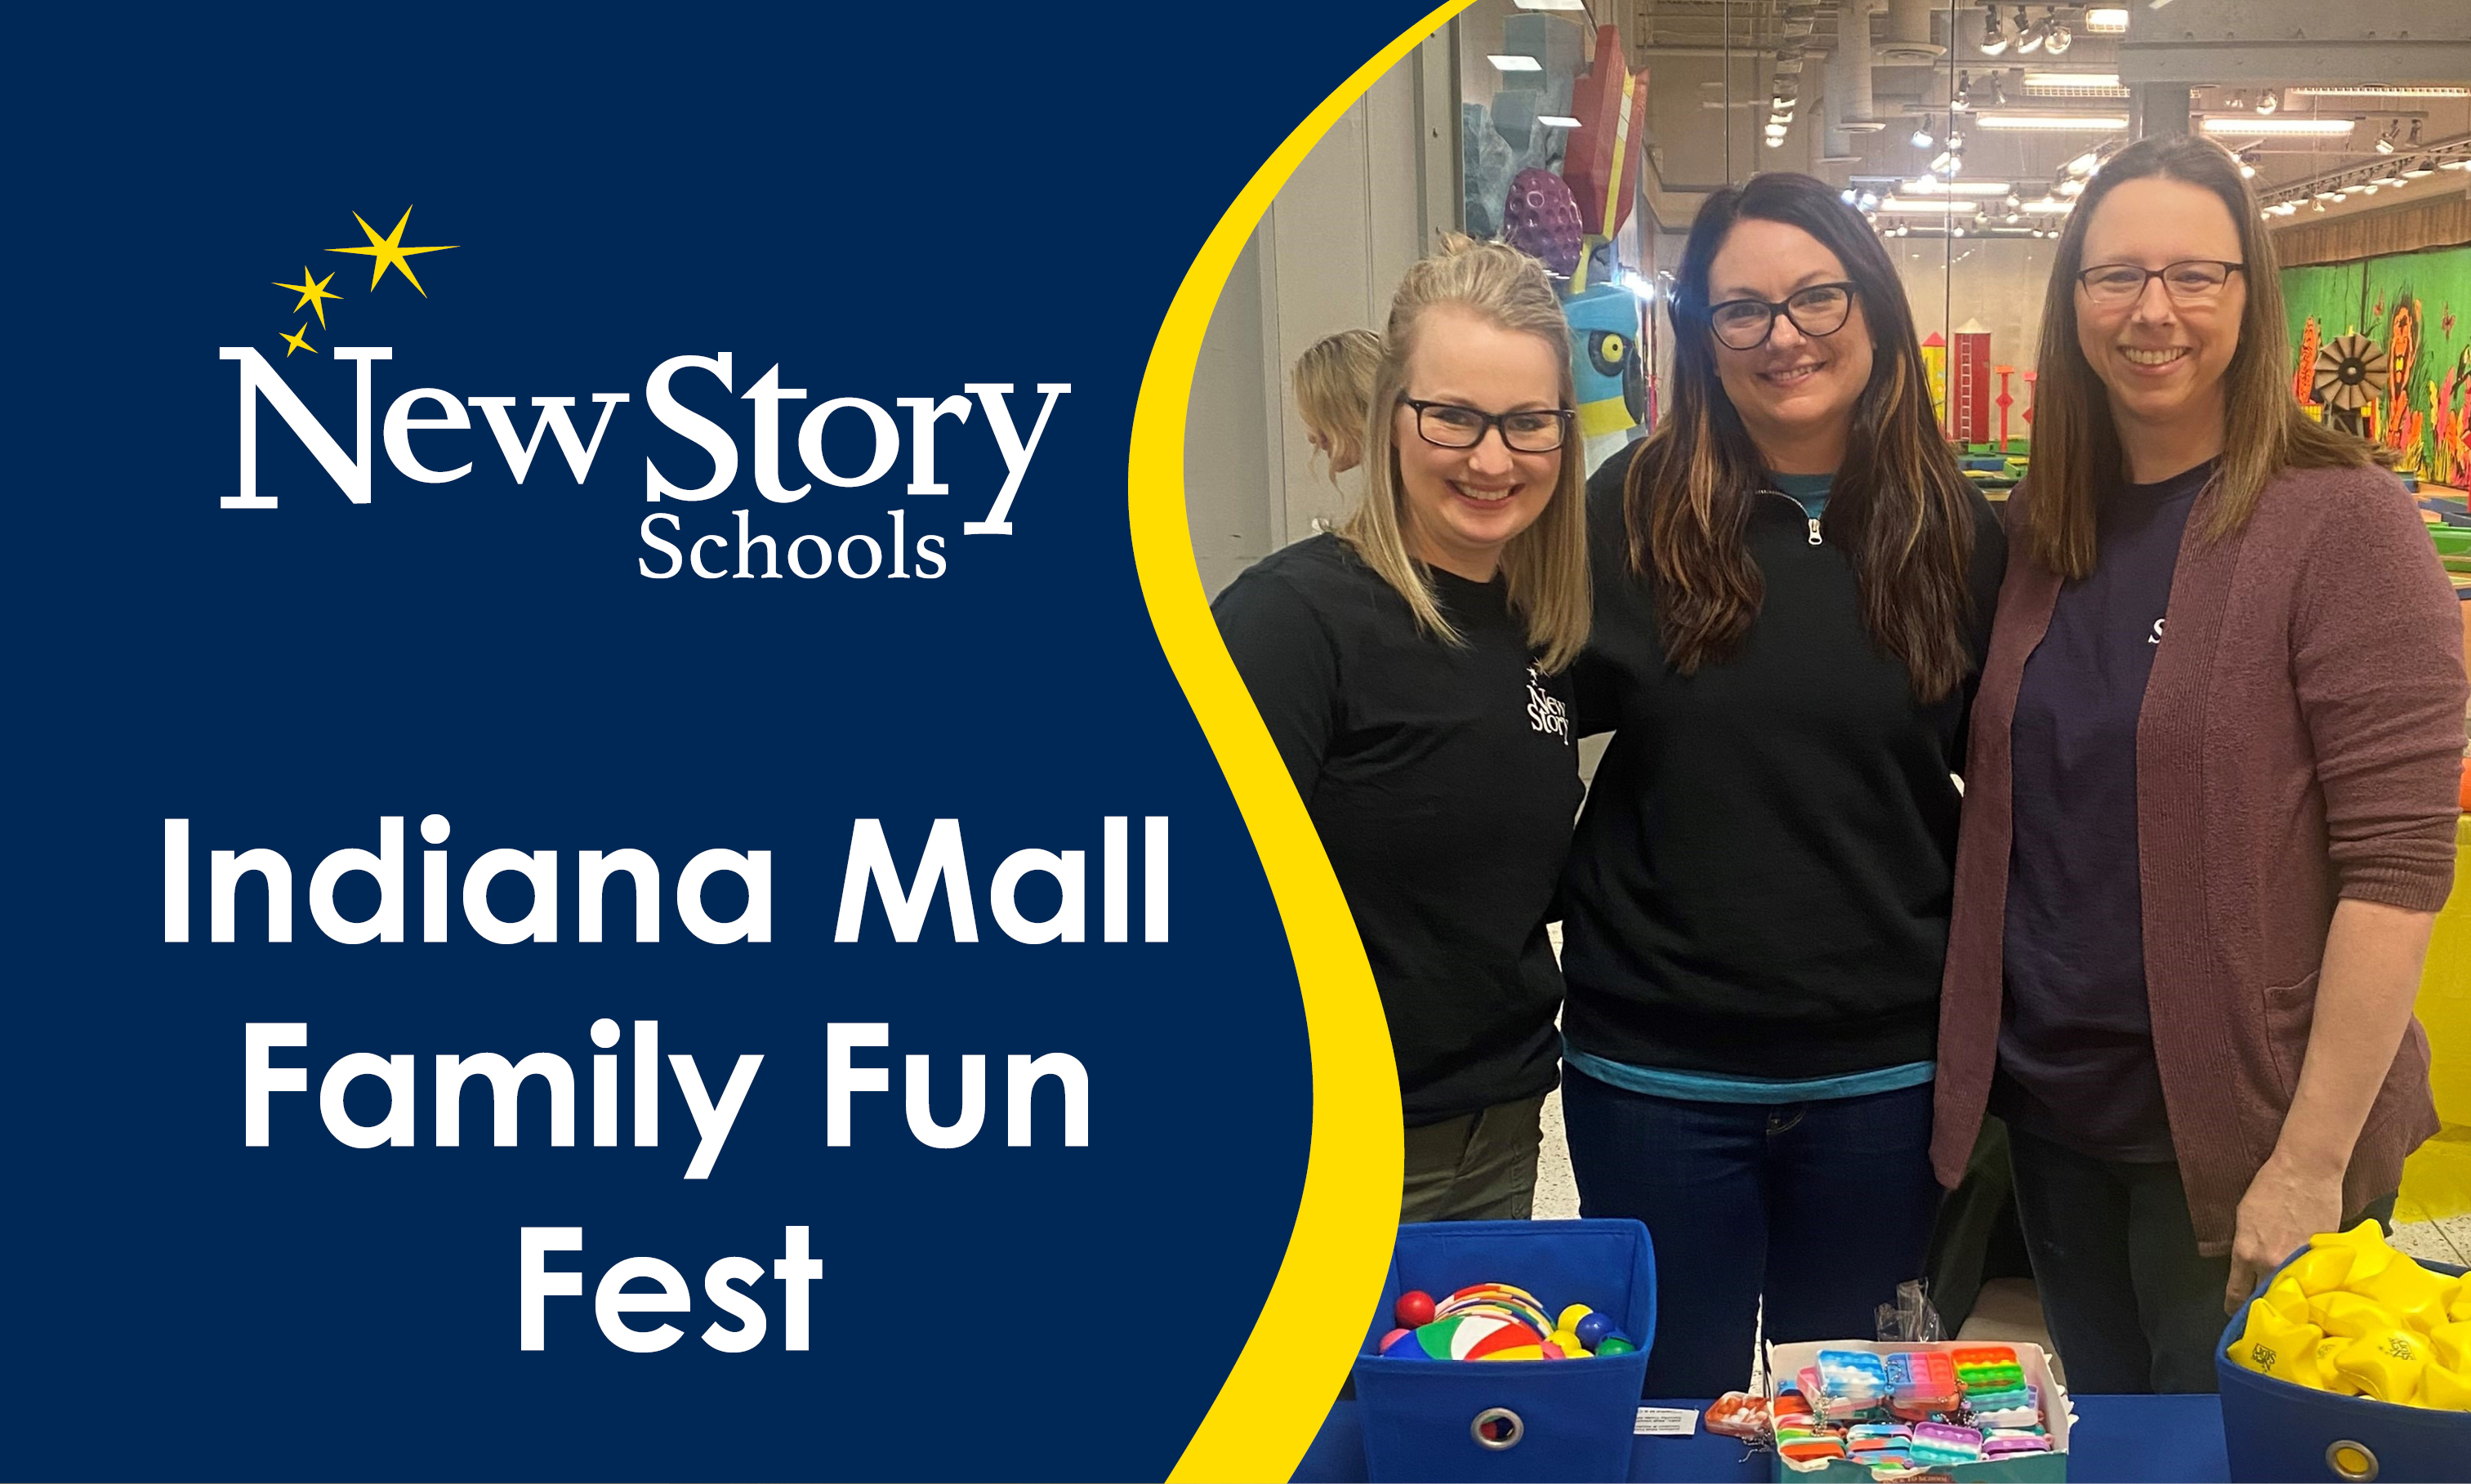 Indiana Mall Family Fun Fest